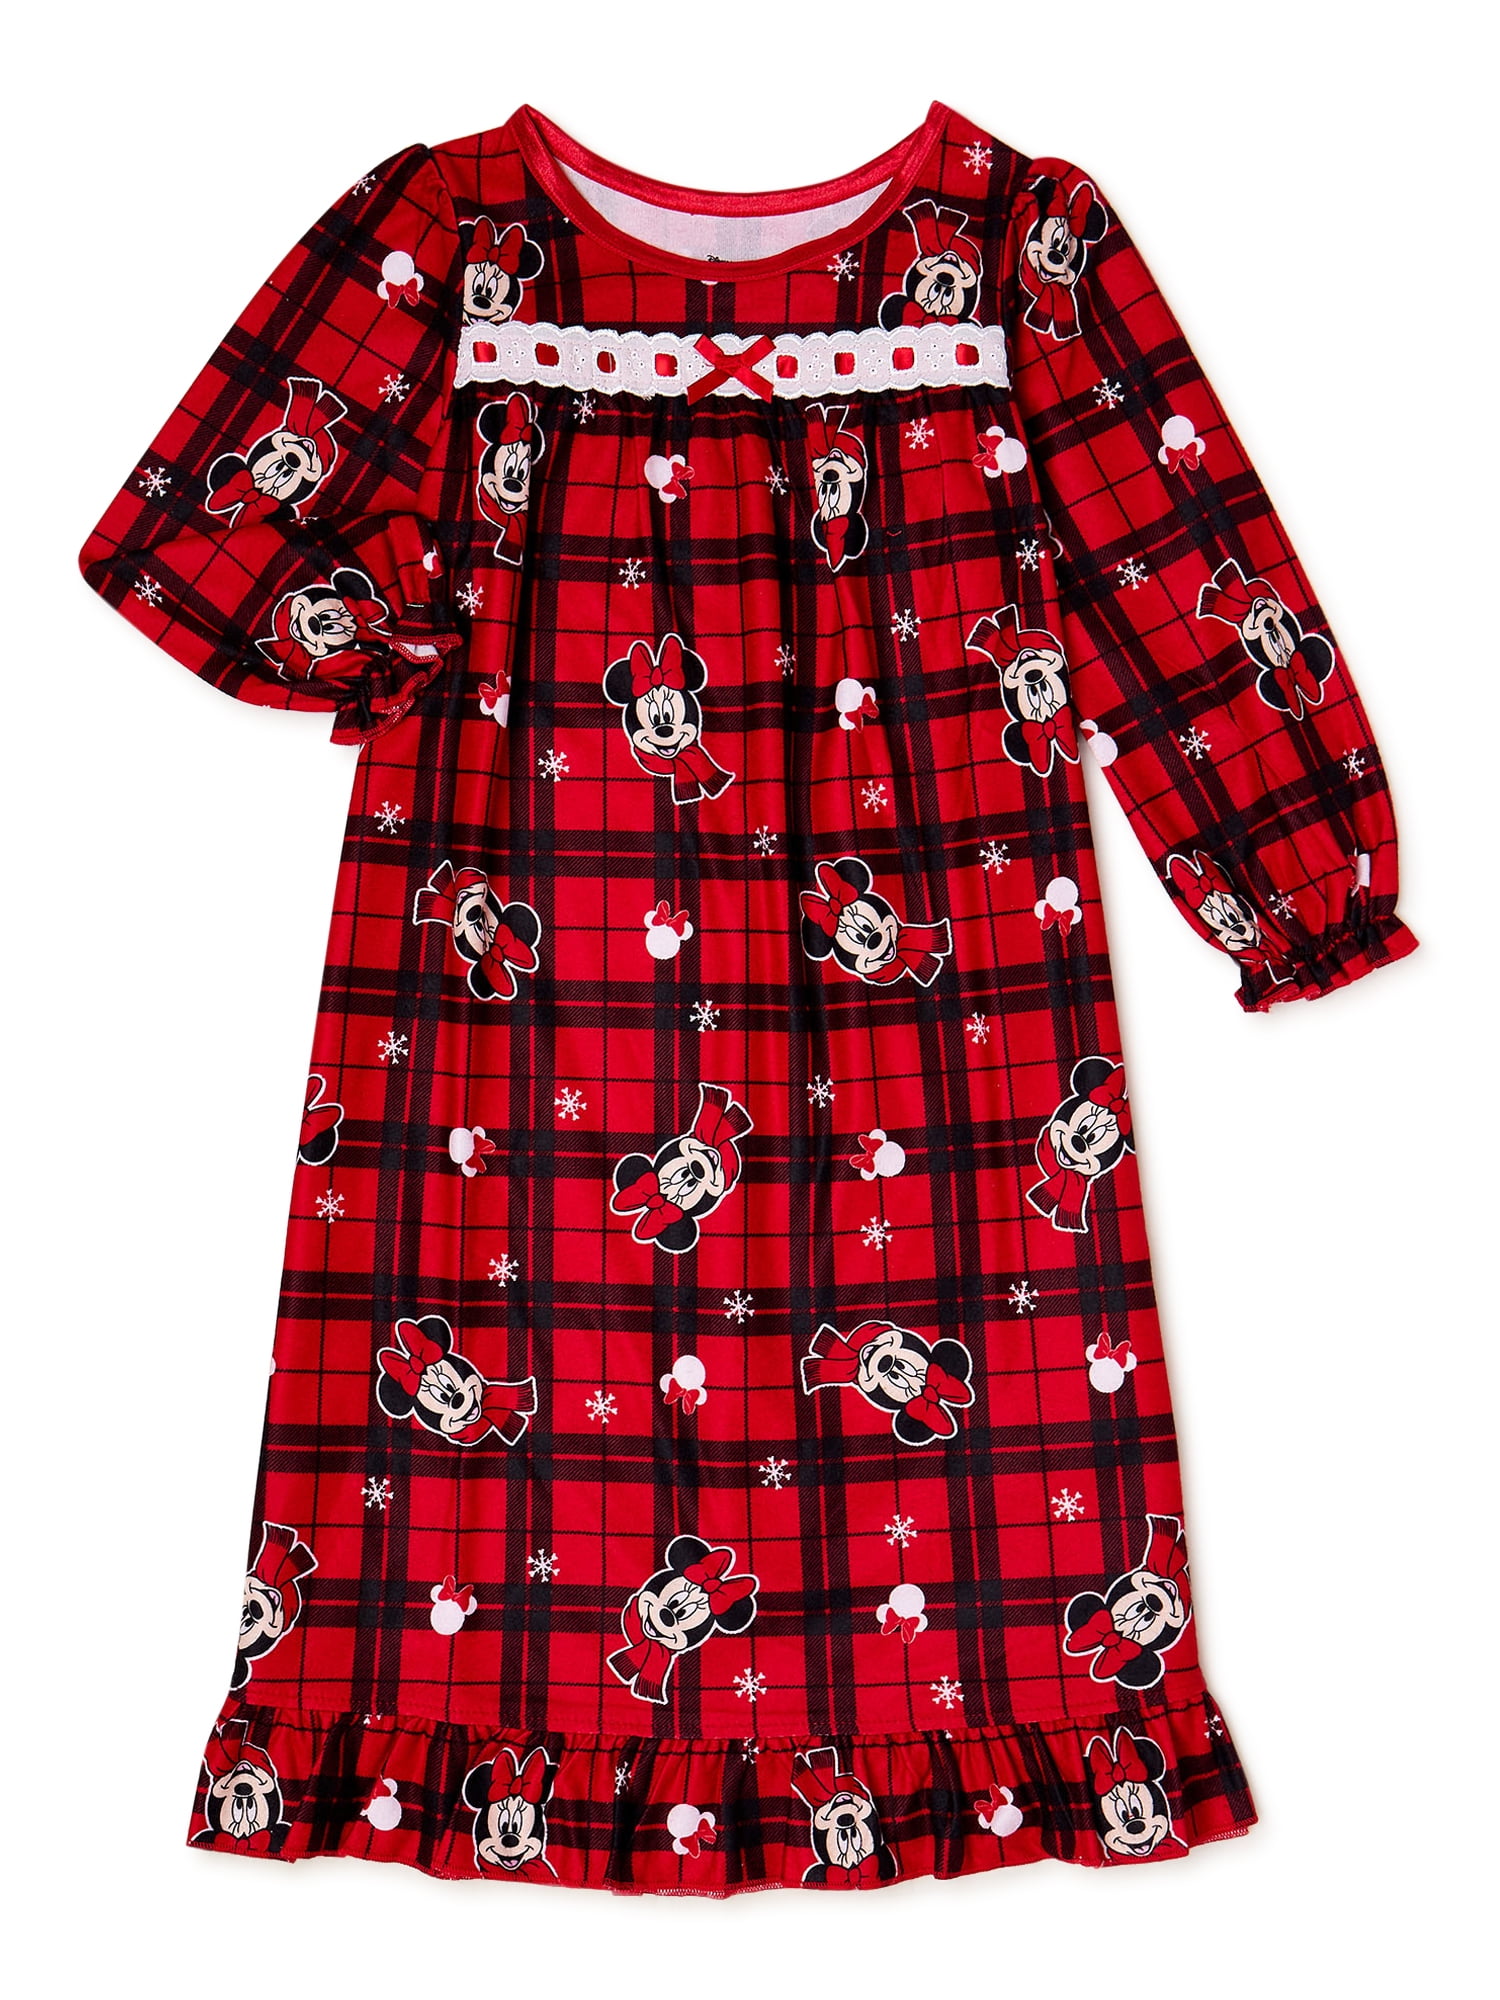 3T Disney Little Girls Minnie Mouse Long Sleeve Nightgown Pajama Sleep Dress Red 